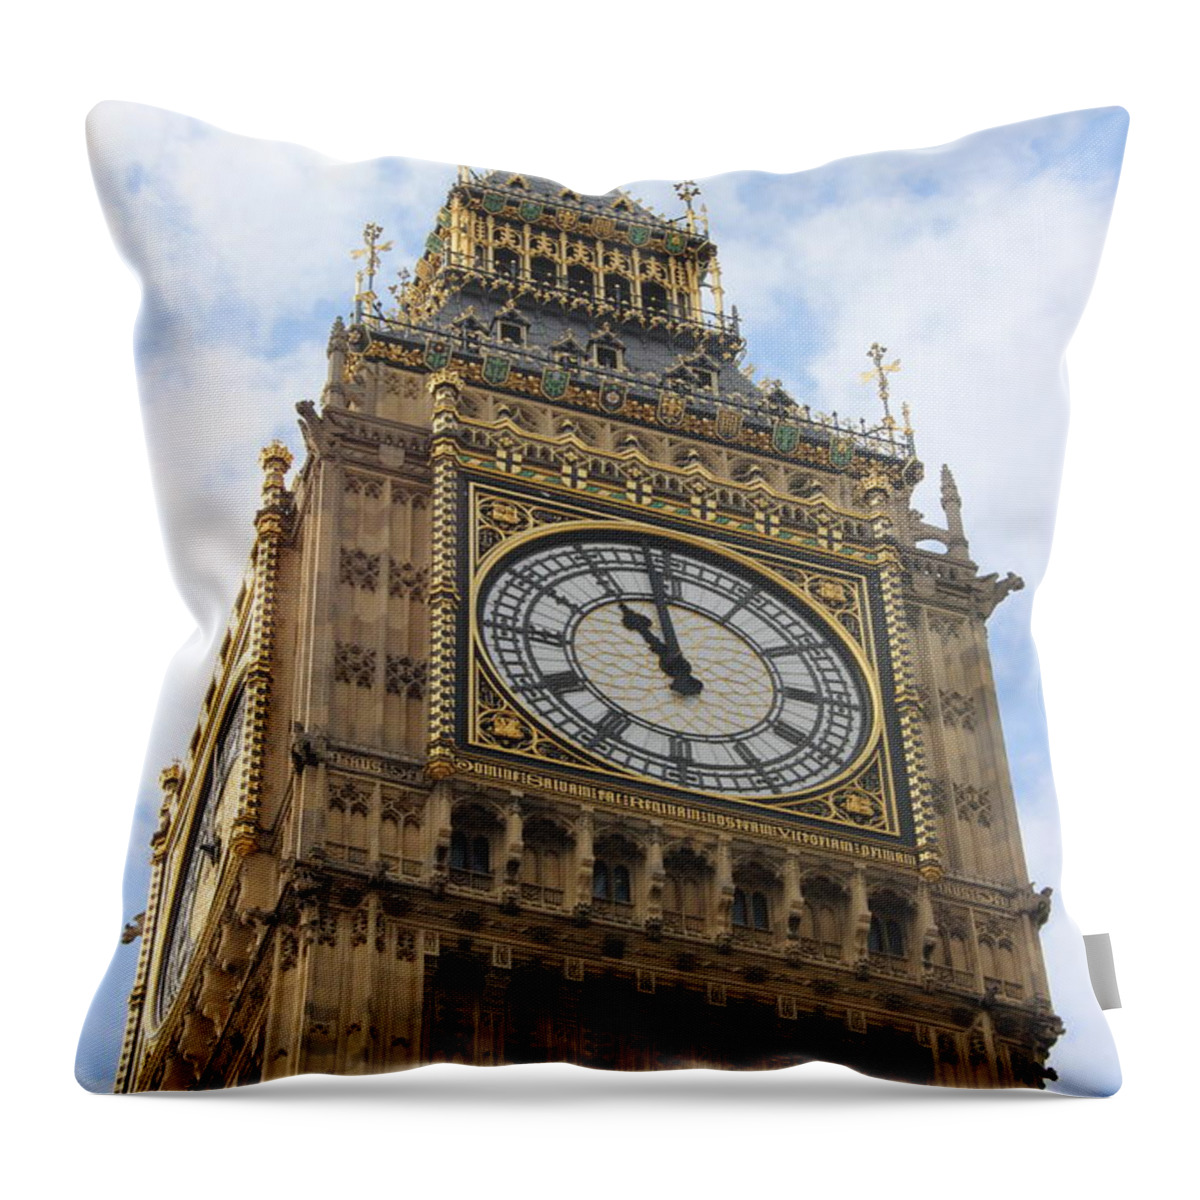 Big Ben Throw Pillow featuring the photograph Big Ben Clock Tower by Laura Smith